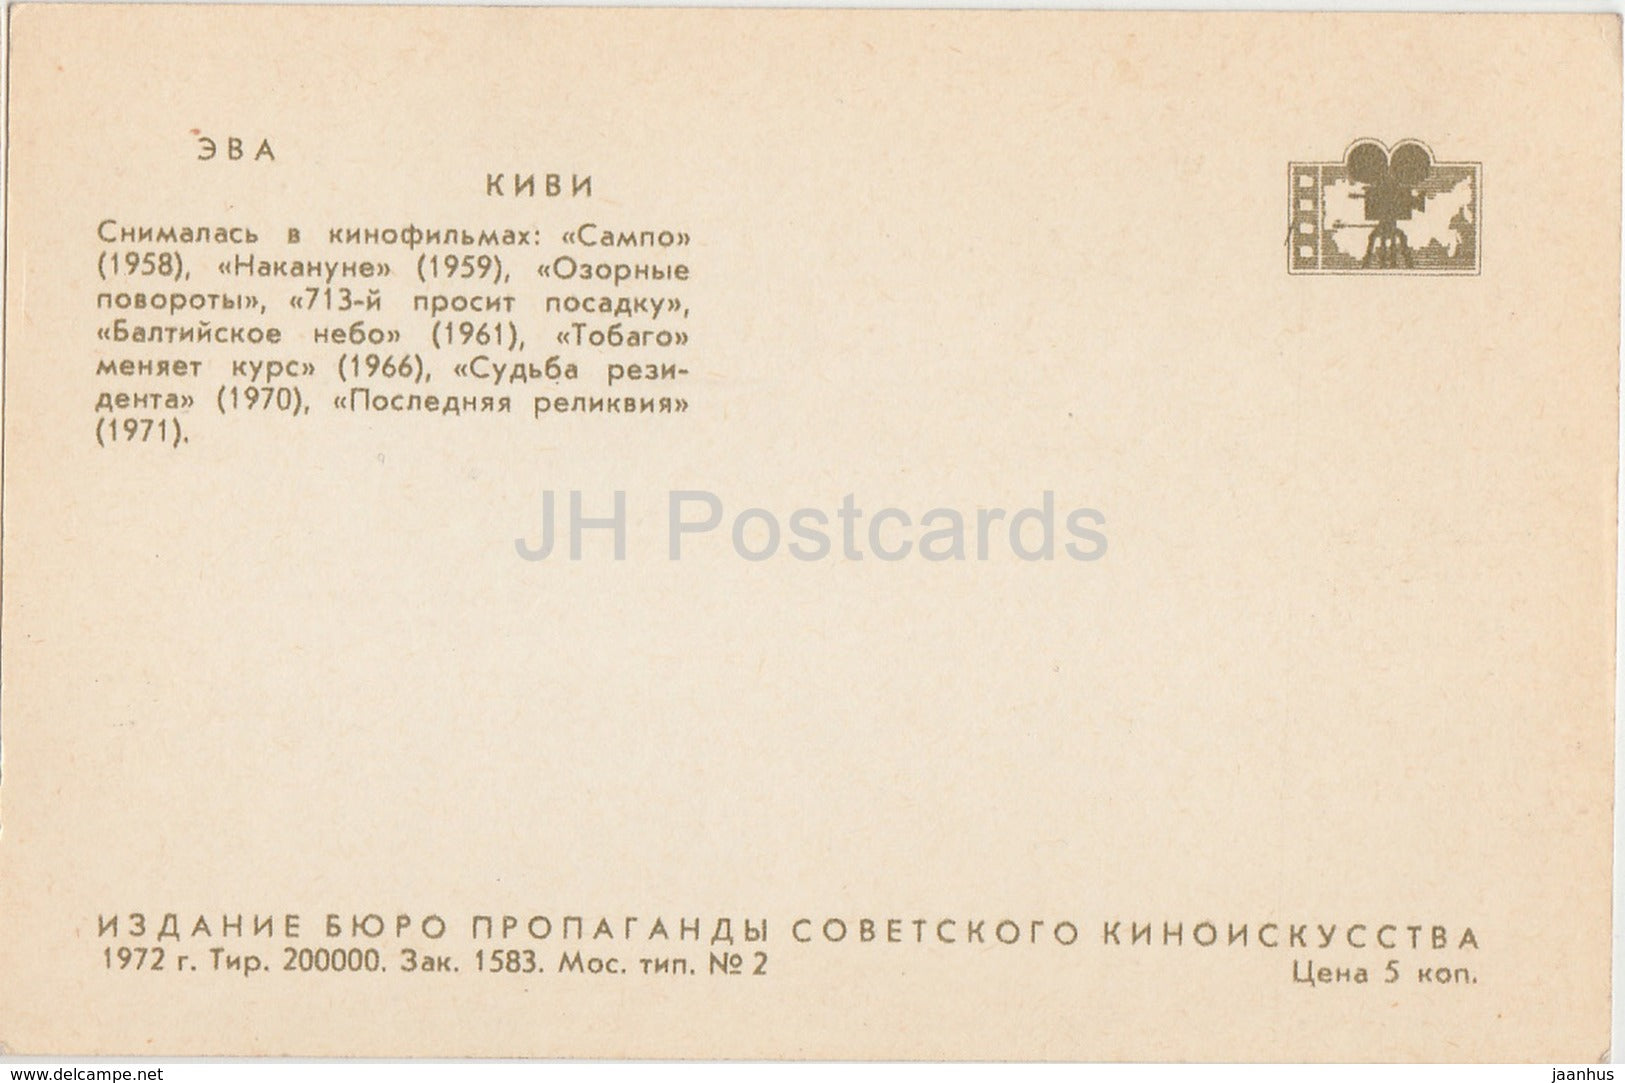 Eve Kivi - movie actress - theatre - 1972 - Russia USSR - unused - JH Postcards